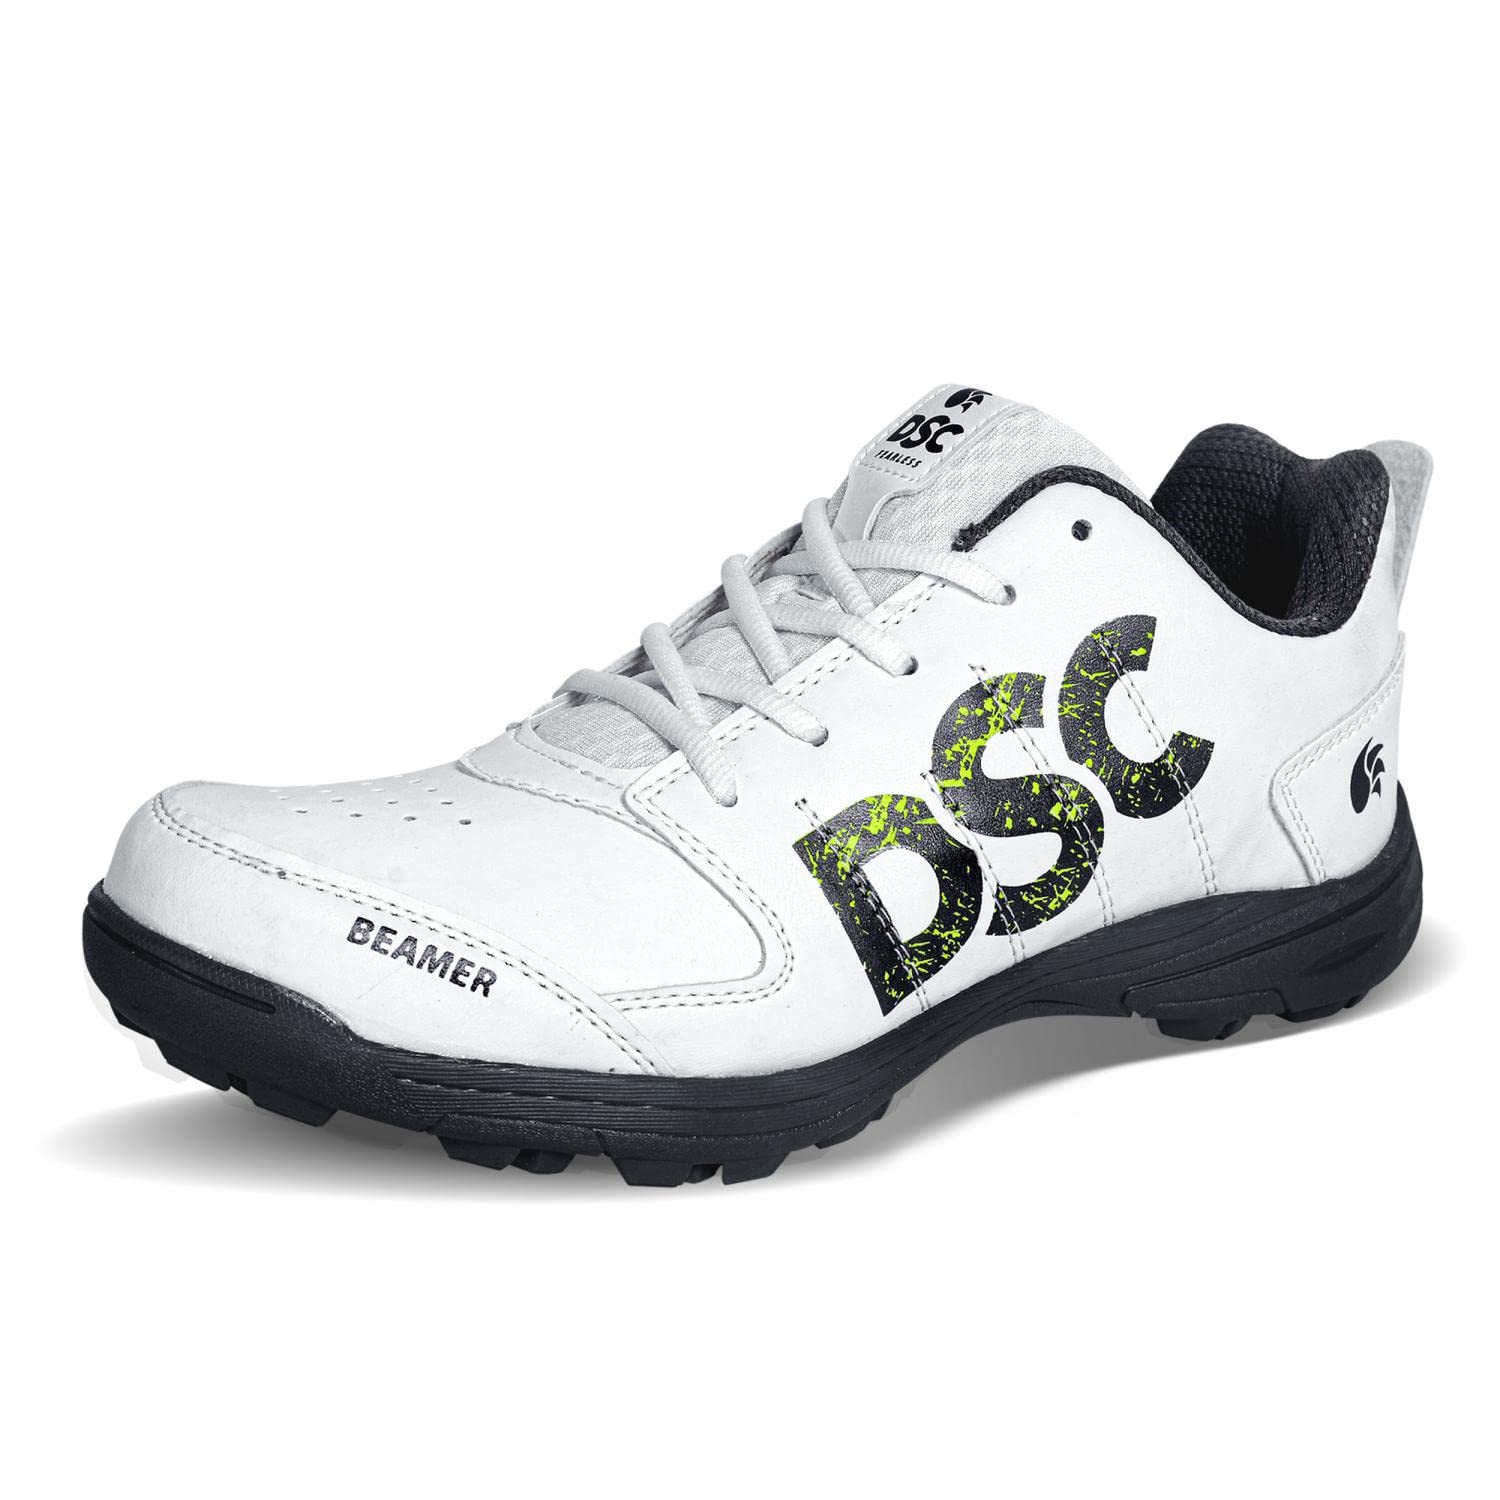 DSC 1503005 Size10US GREY WHITE BEAMER CRICKET SHOES